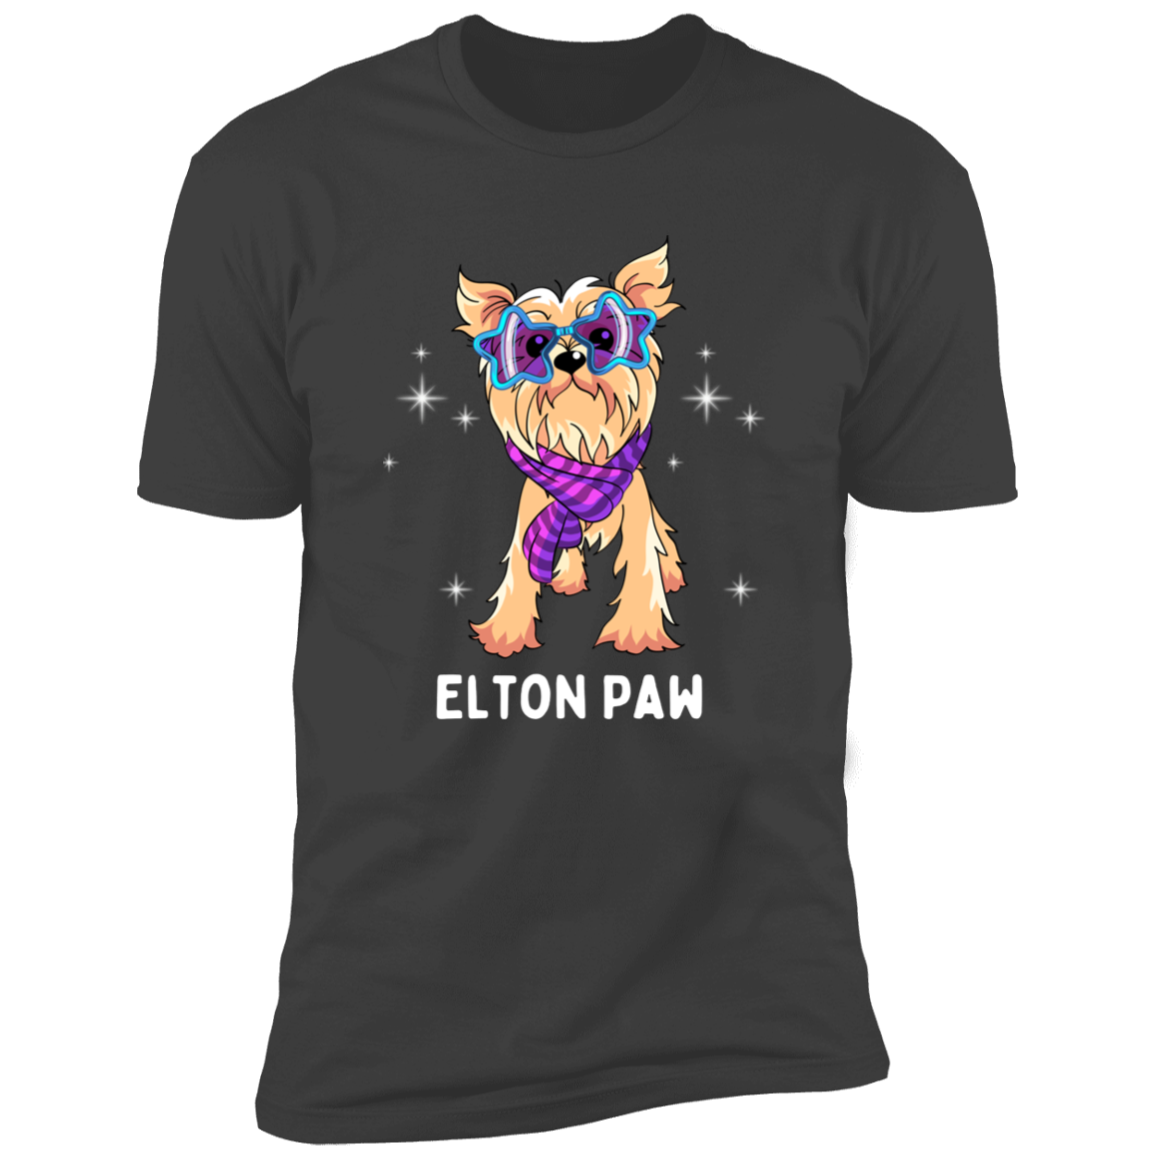 Elton Paw Dog Shirt, Funny dog shirt for humans, Dog mom shirt, dog dad shirt, in heavy metal gray